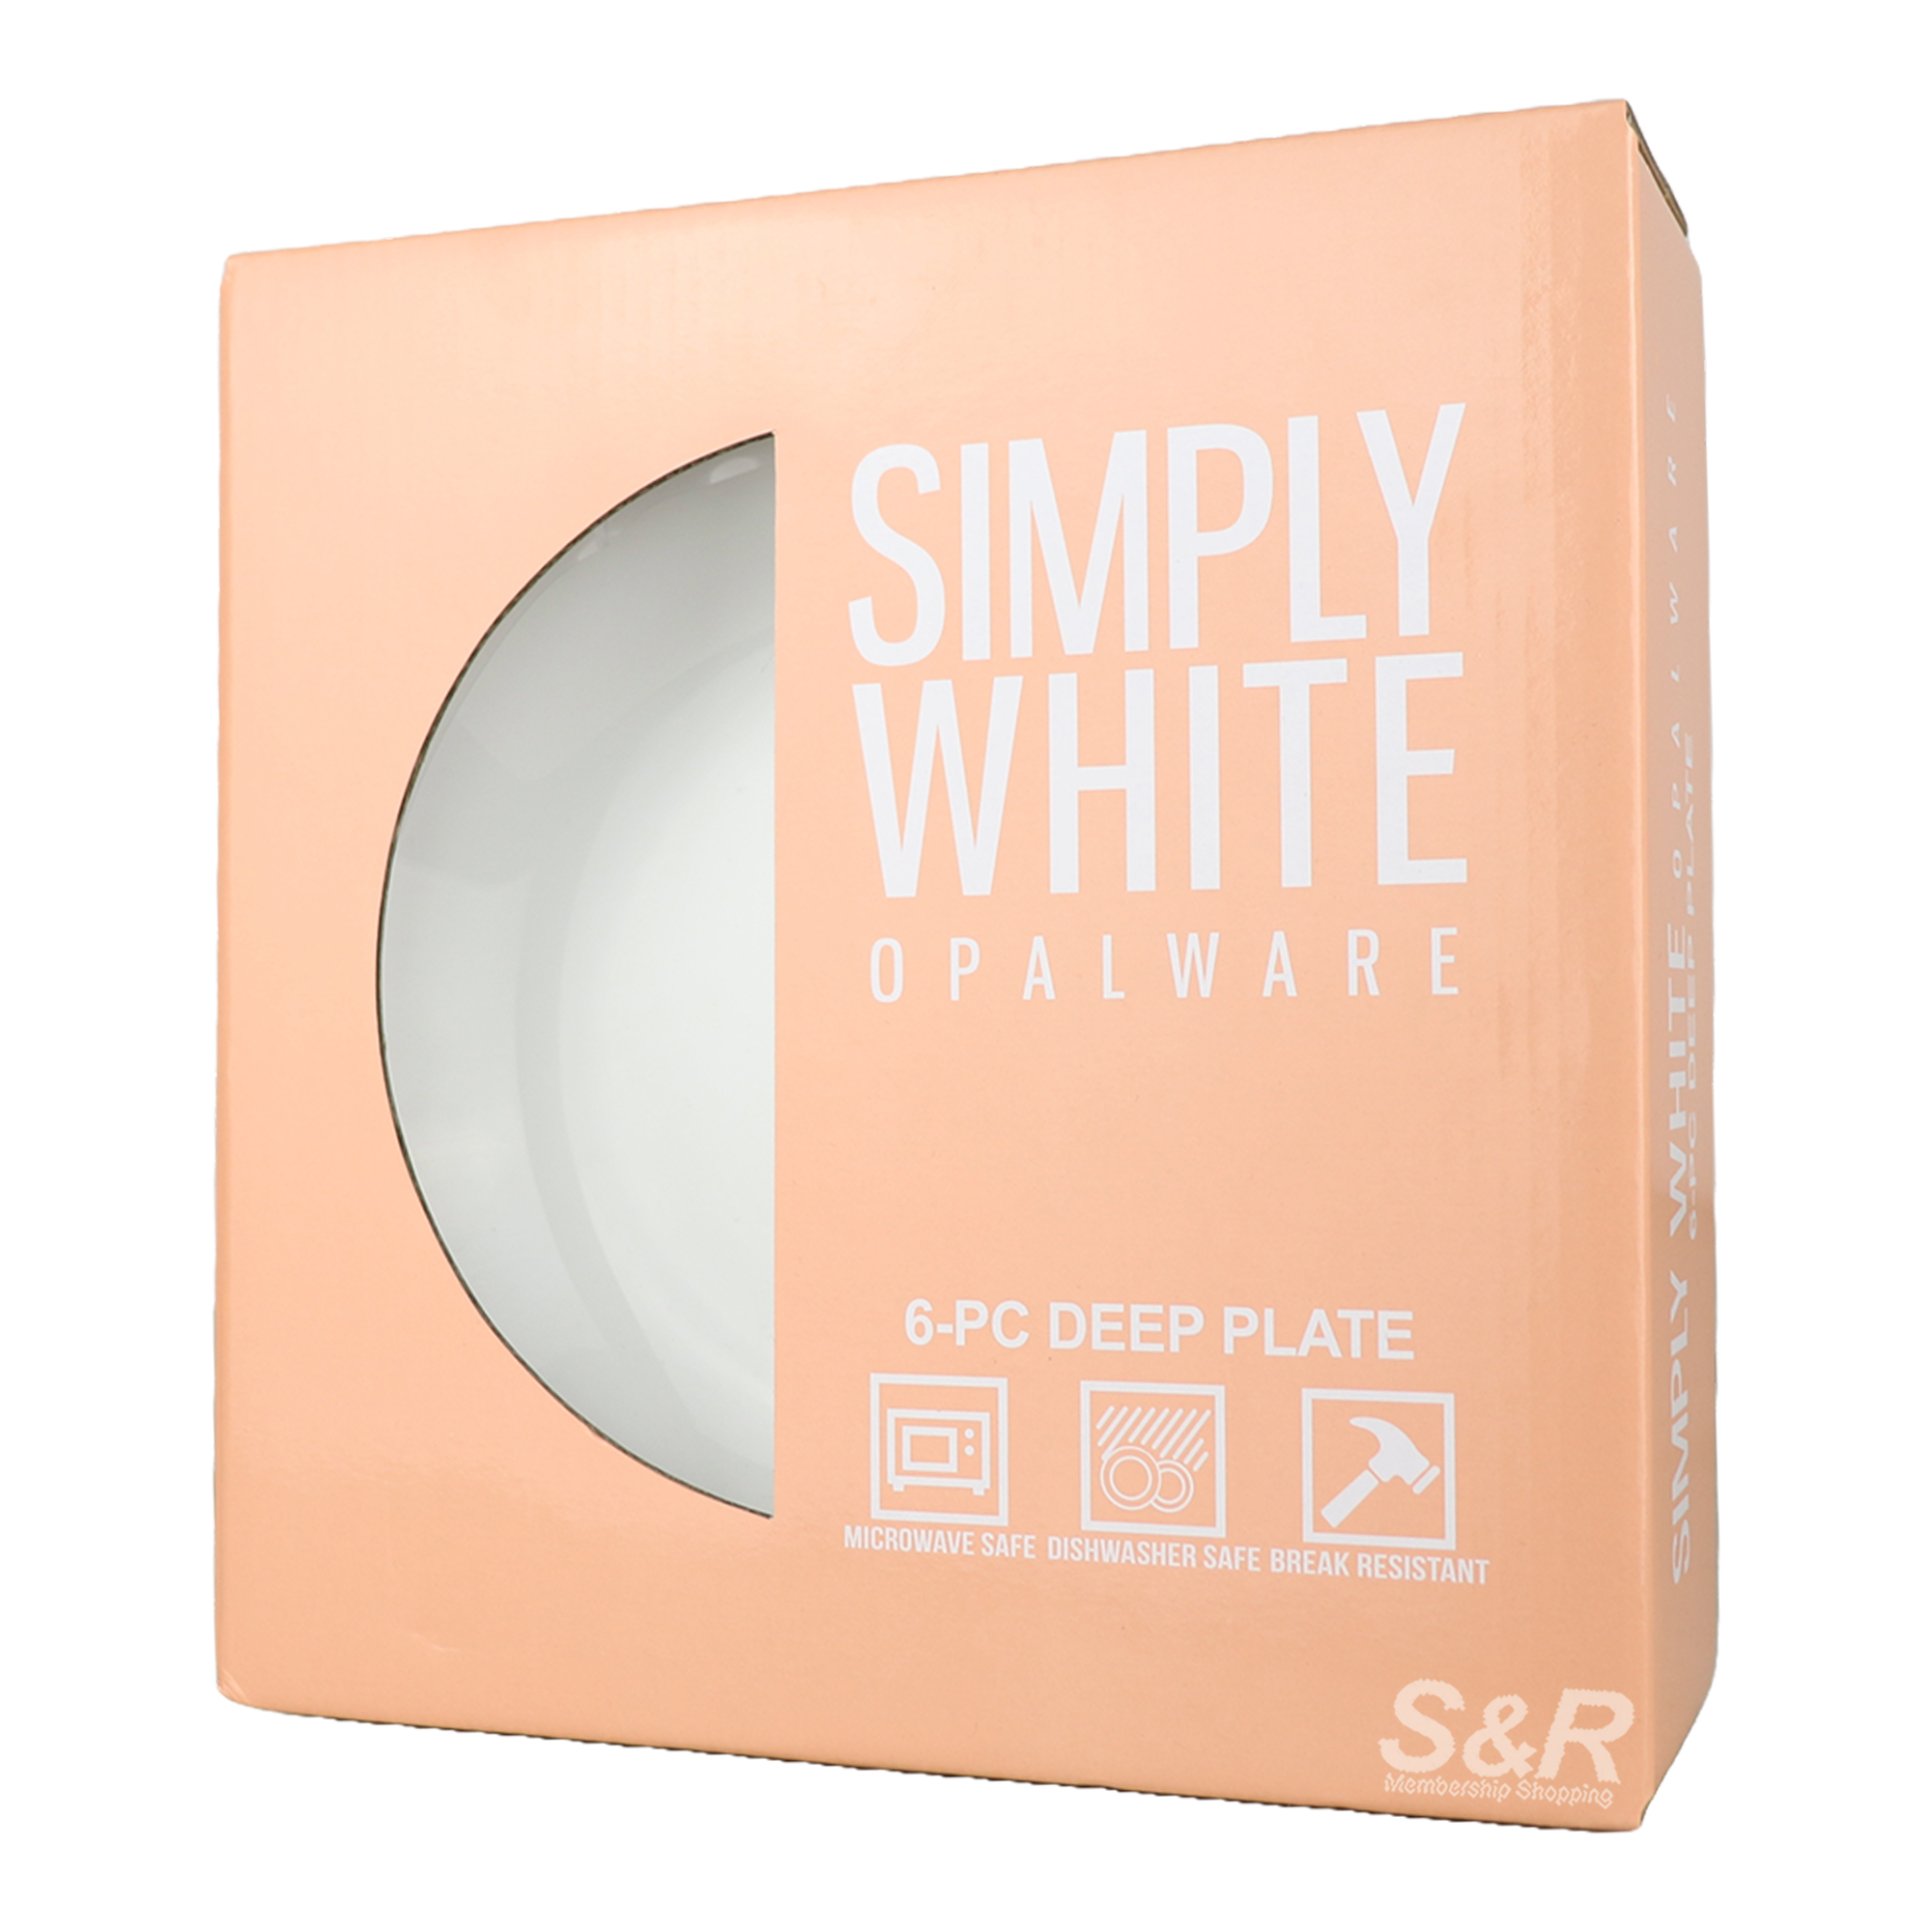 Simply White Opalware Deep Plate 6pcs